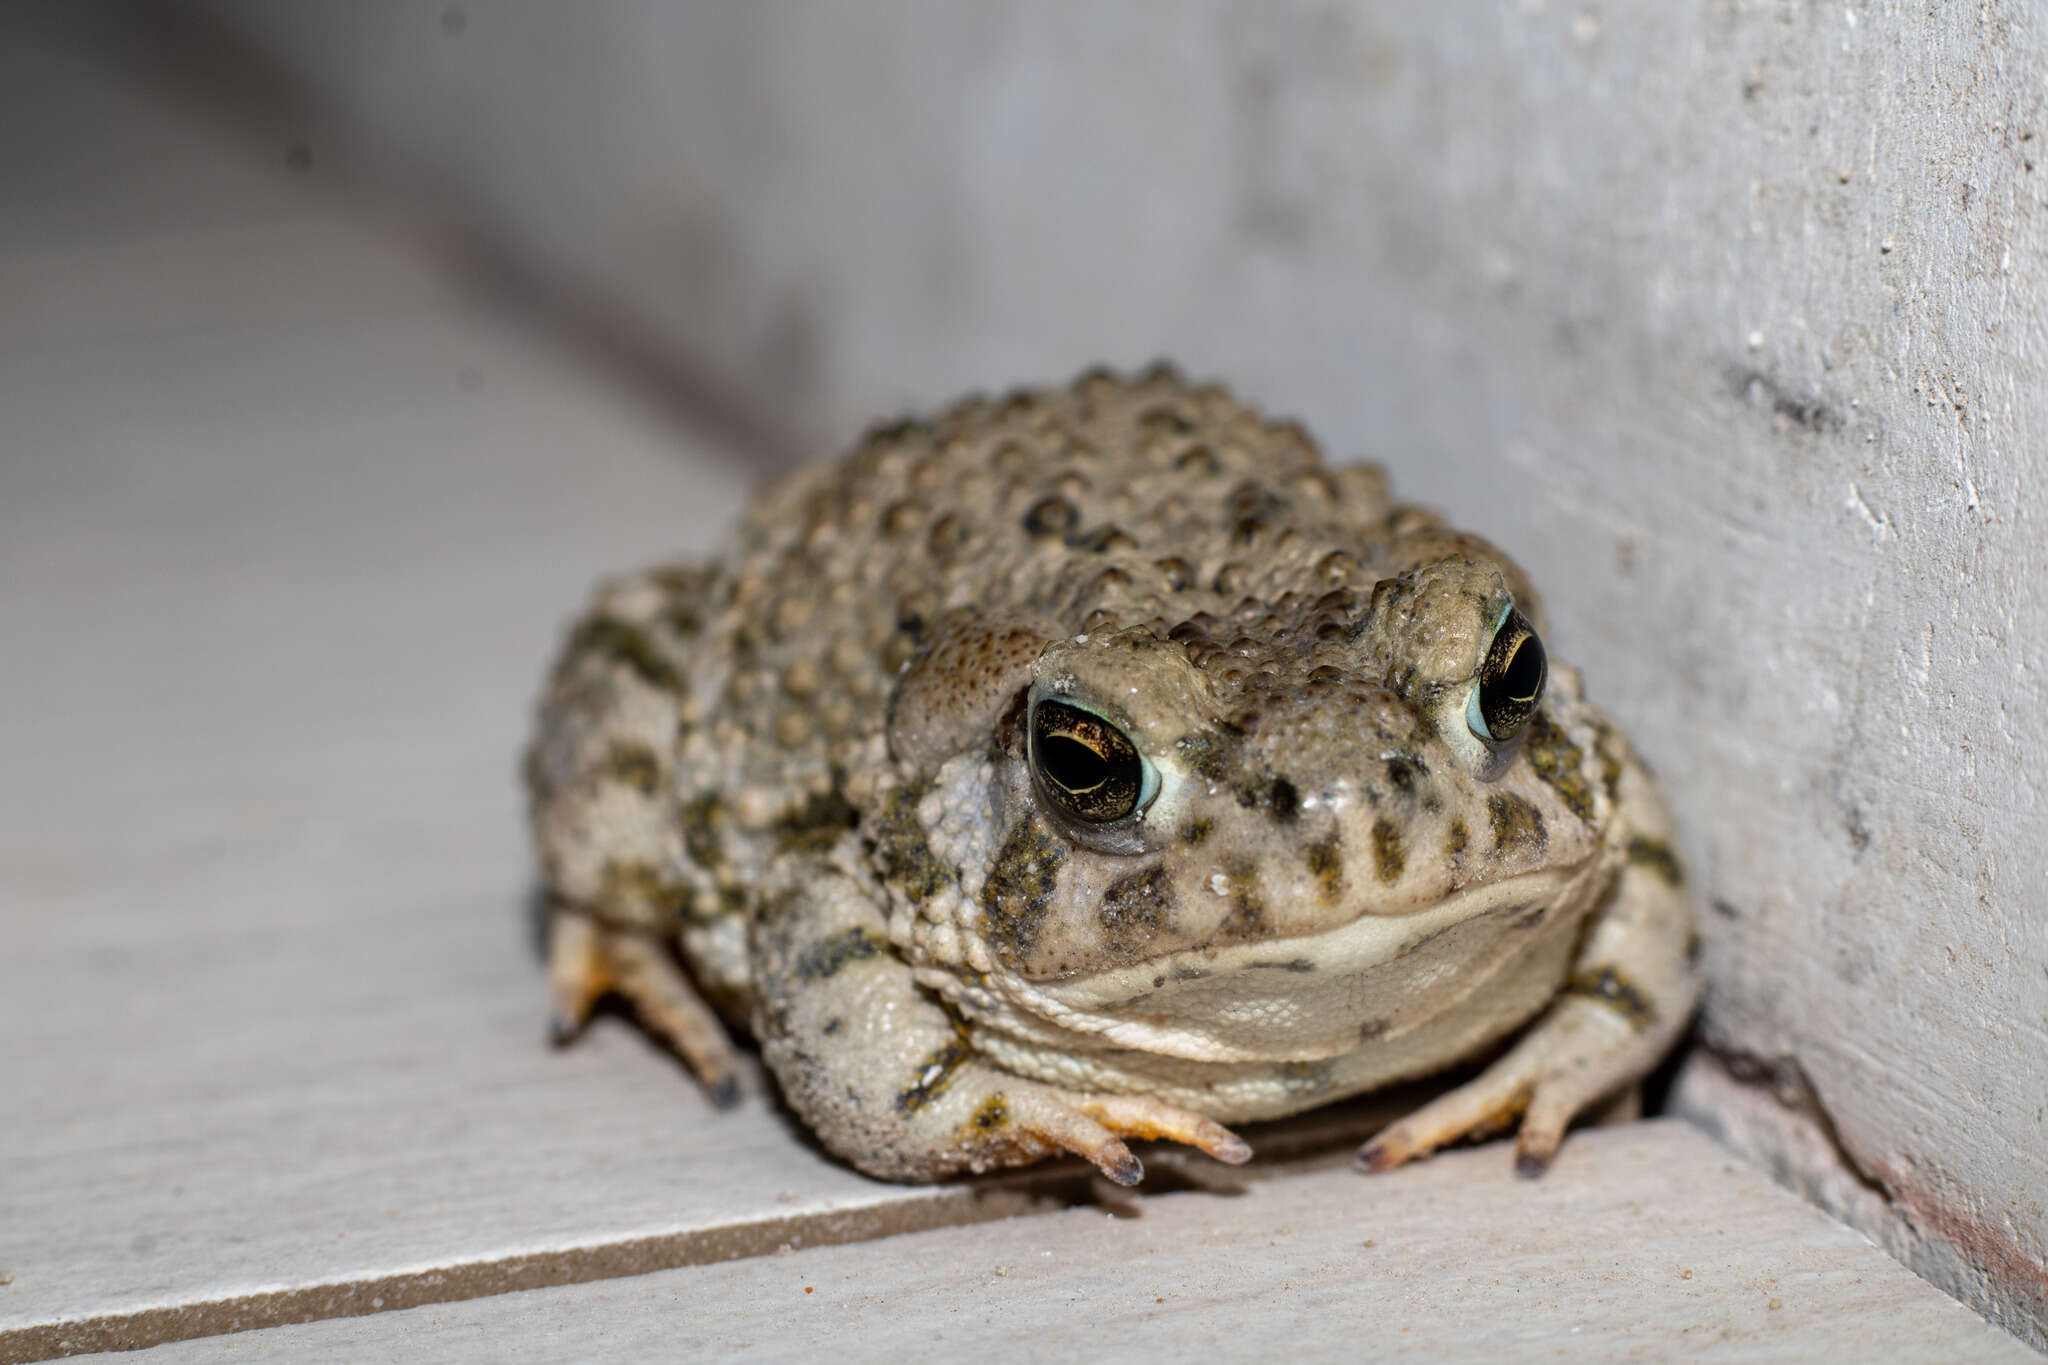 Image of Plateau toad